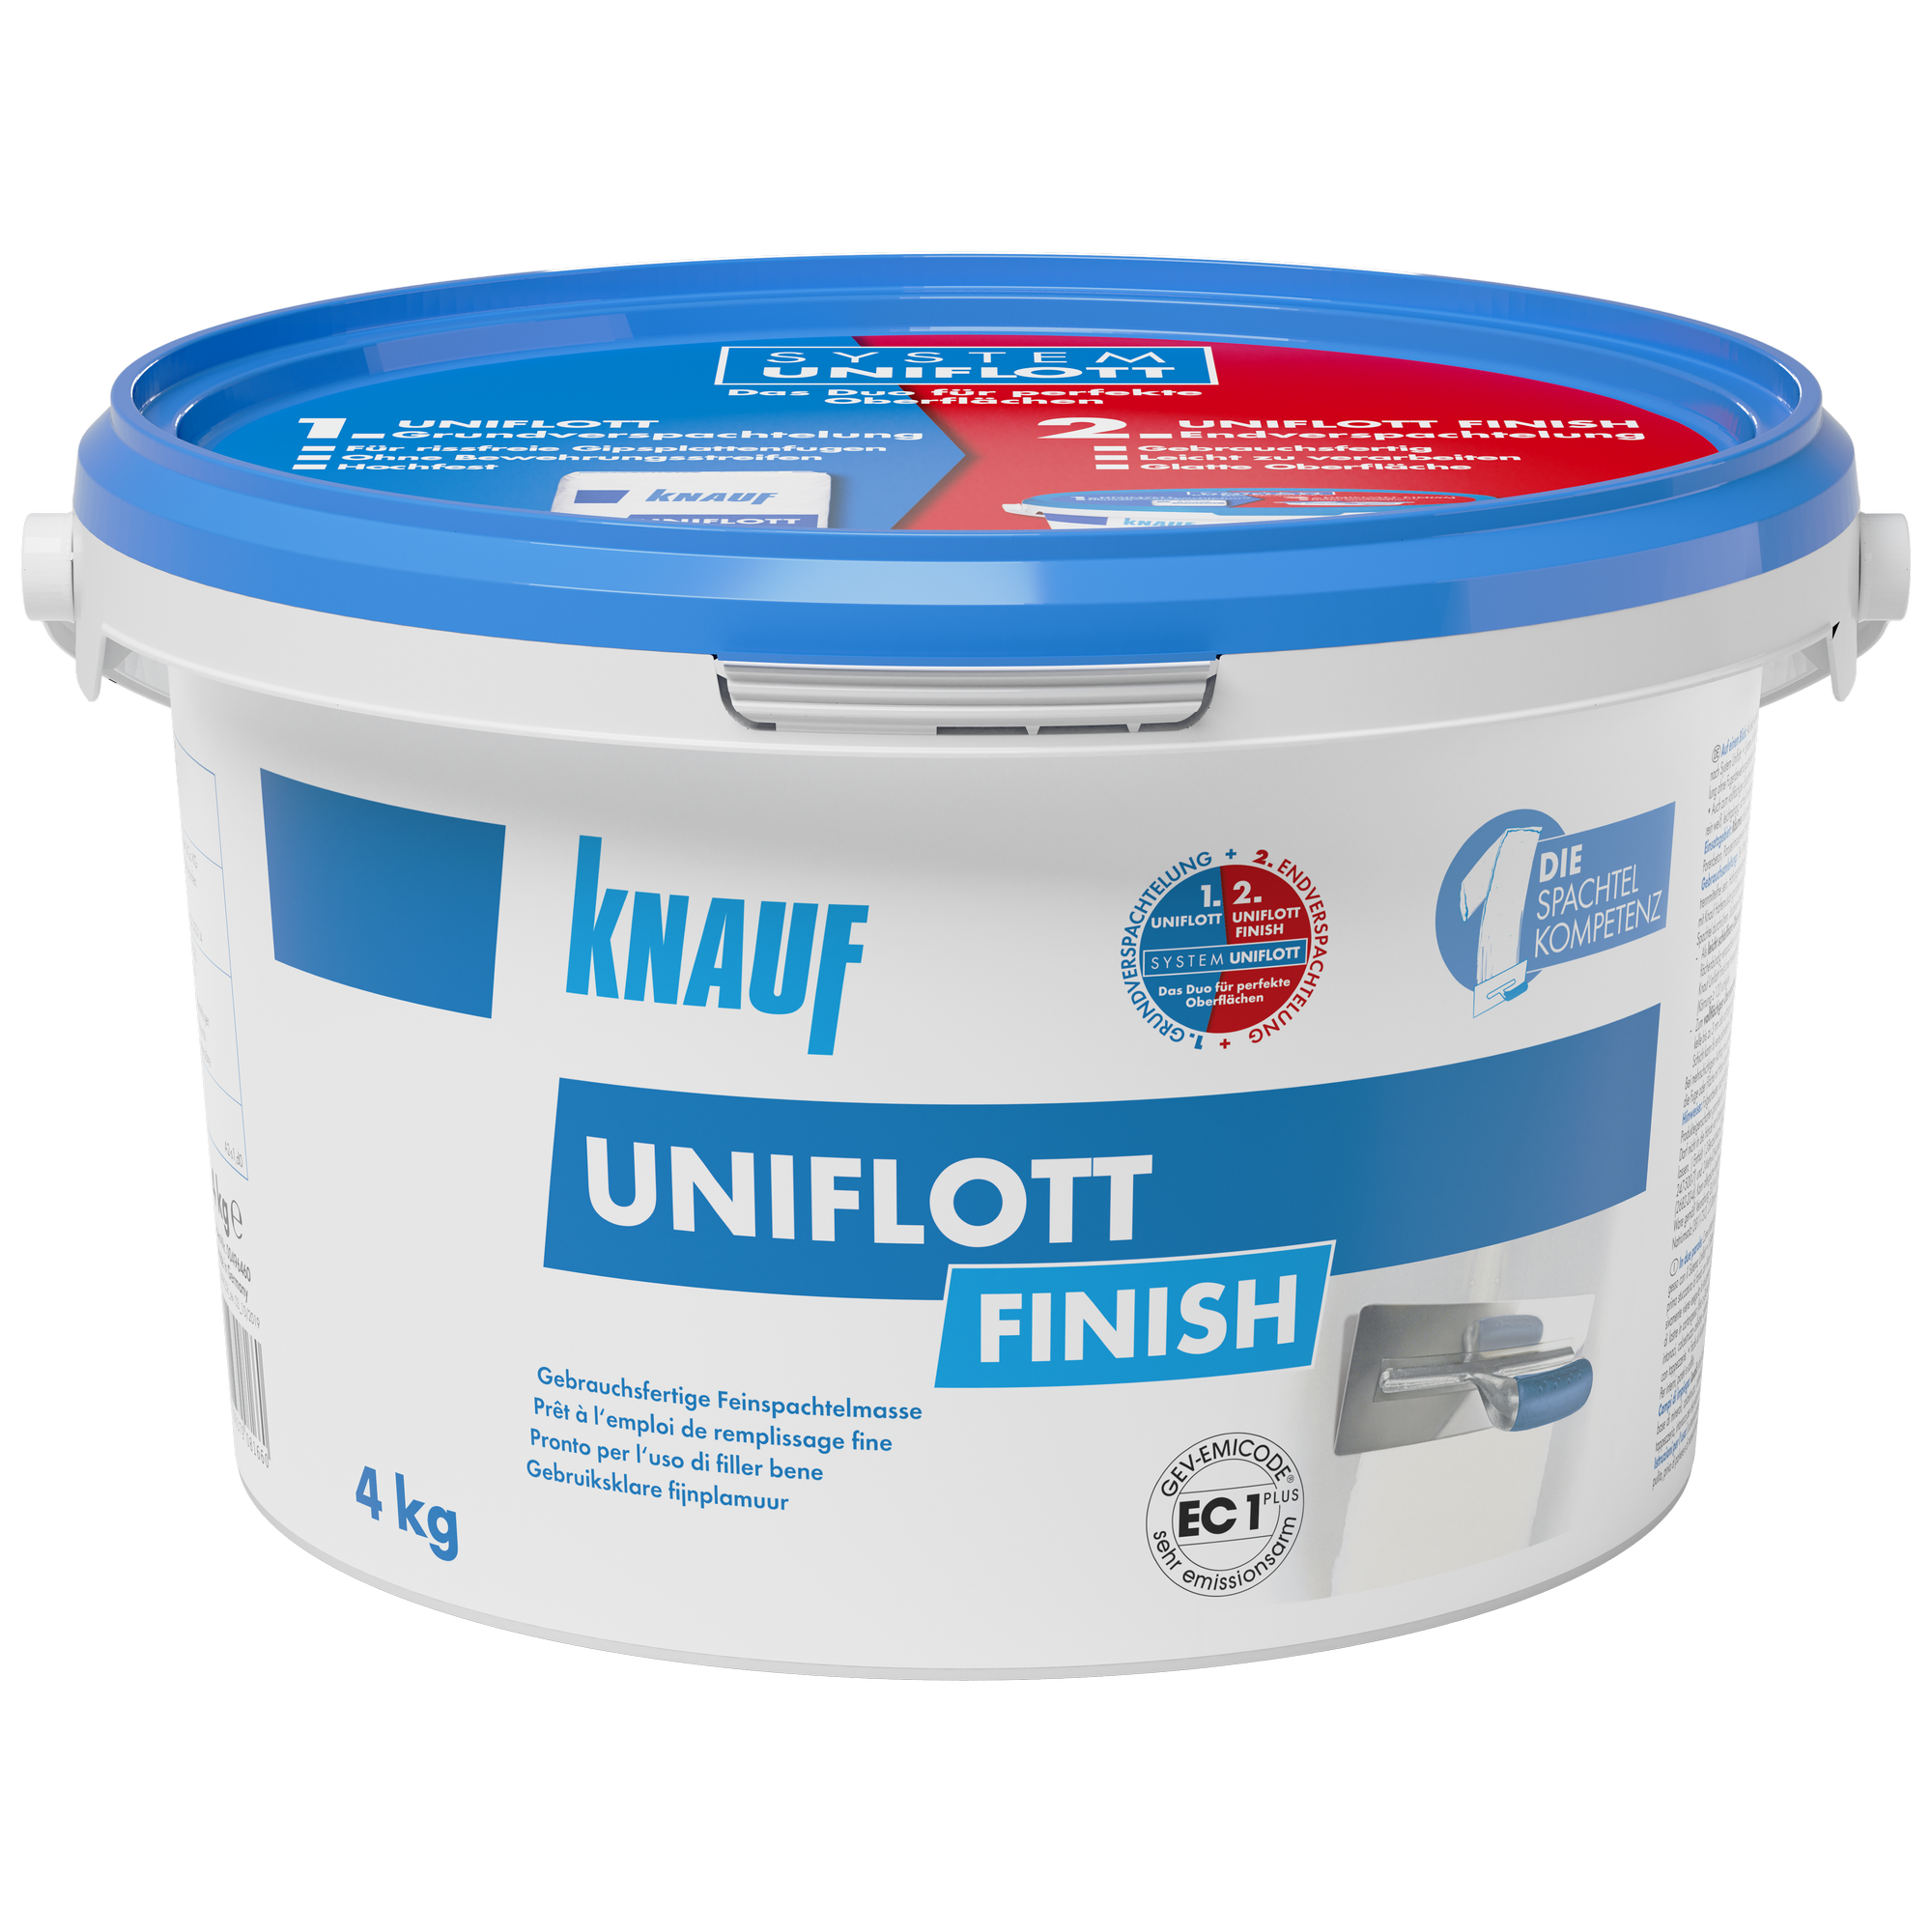 Feinspachtelmasse 'Uniflott Finish' 4 kg + product picture